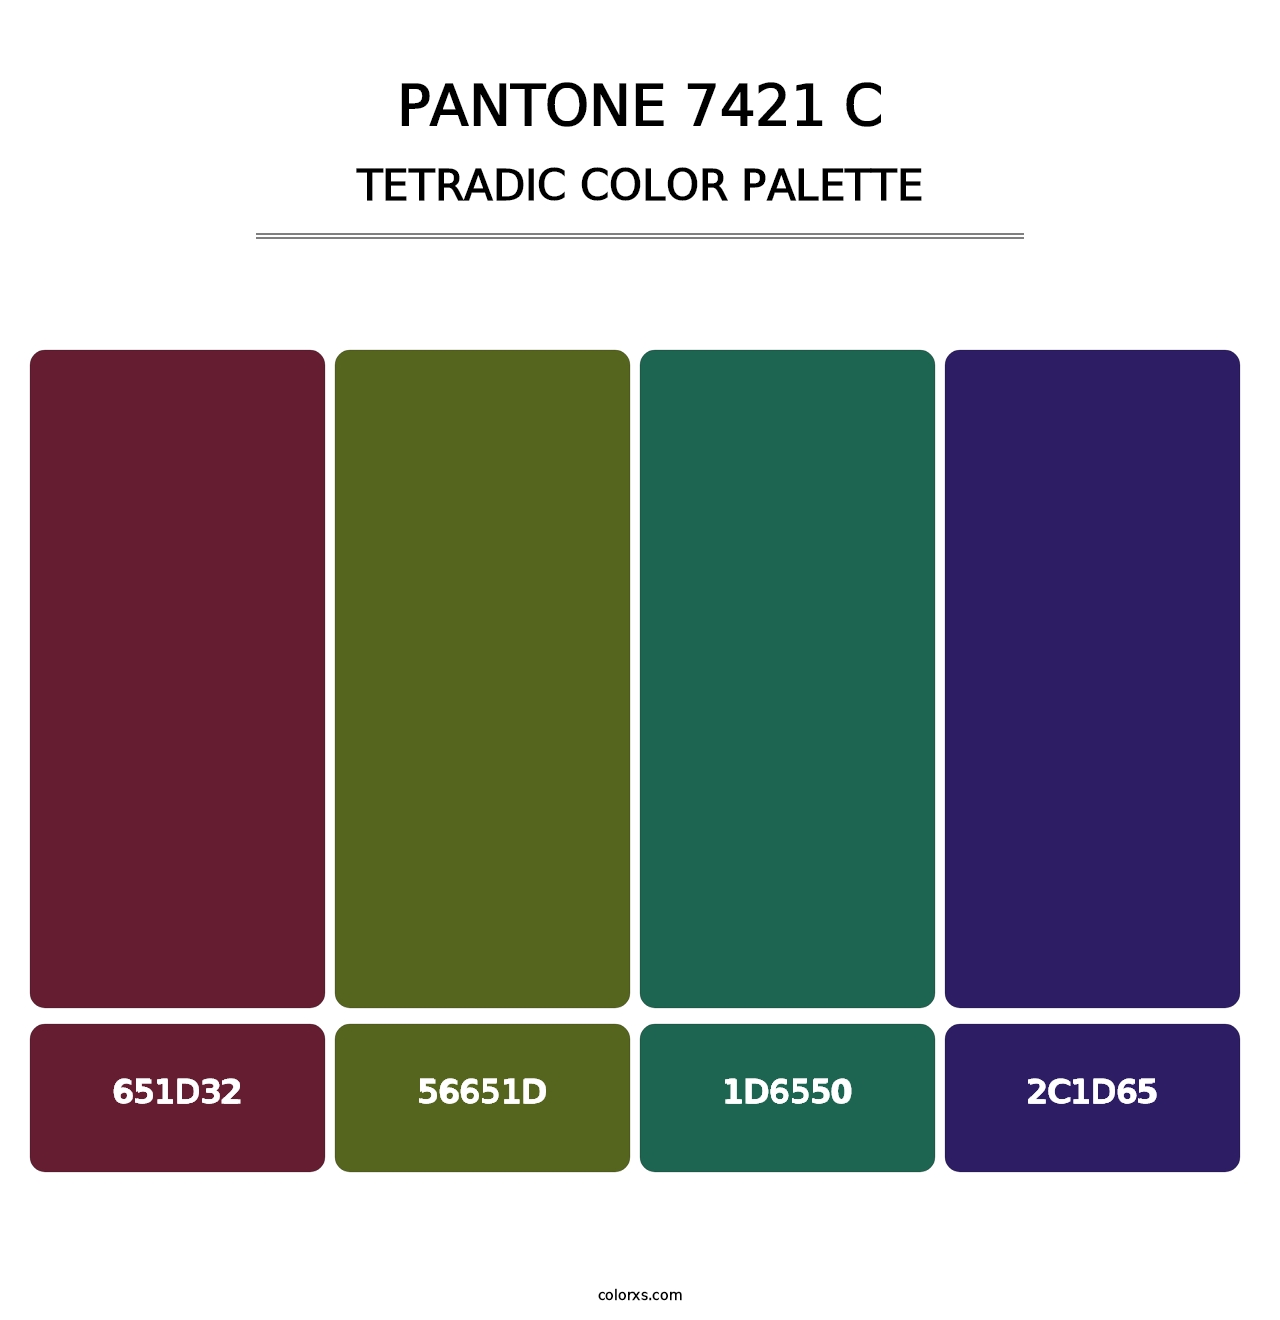 PANTONE 7421 C - Tetradic Color Palette